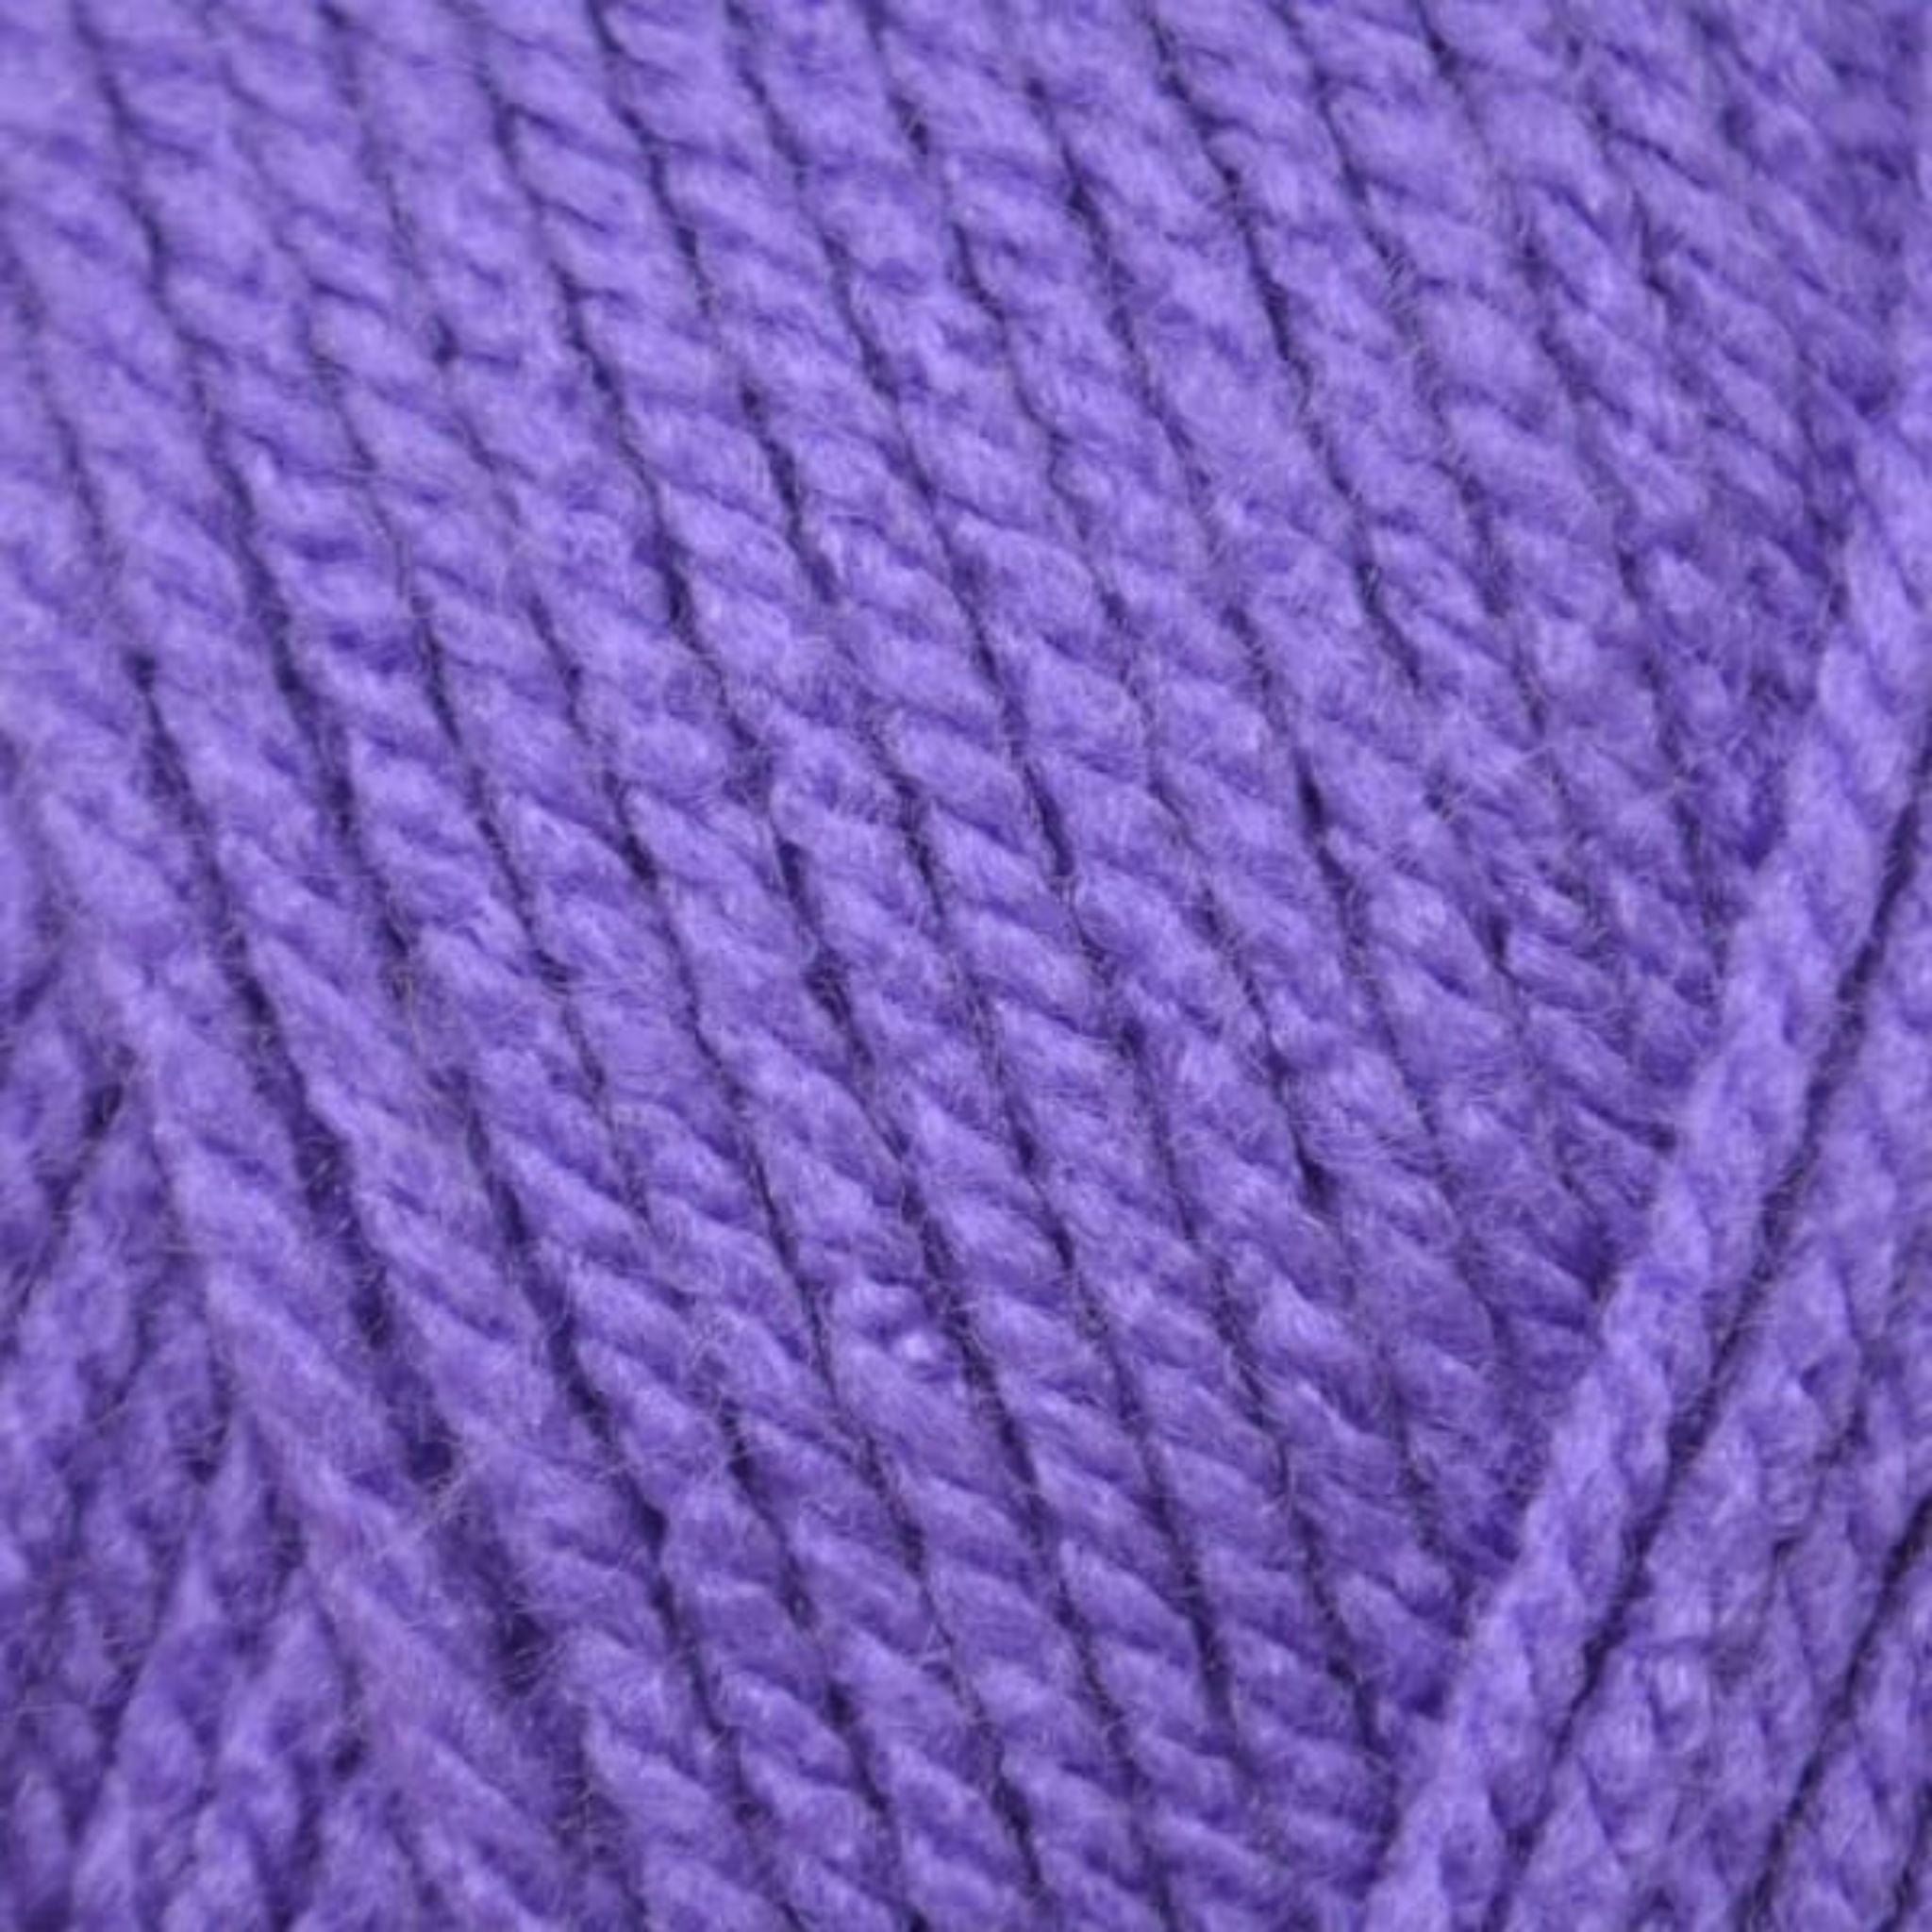 Thistle purple acrylic aran wool 100g ball - Emu Yarns